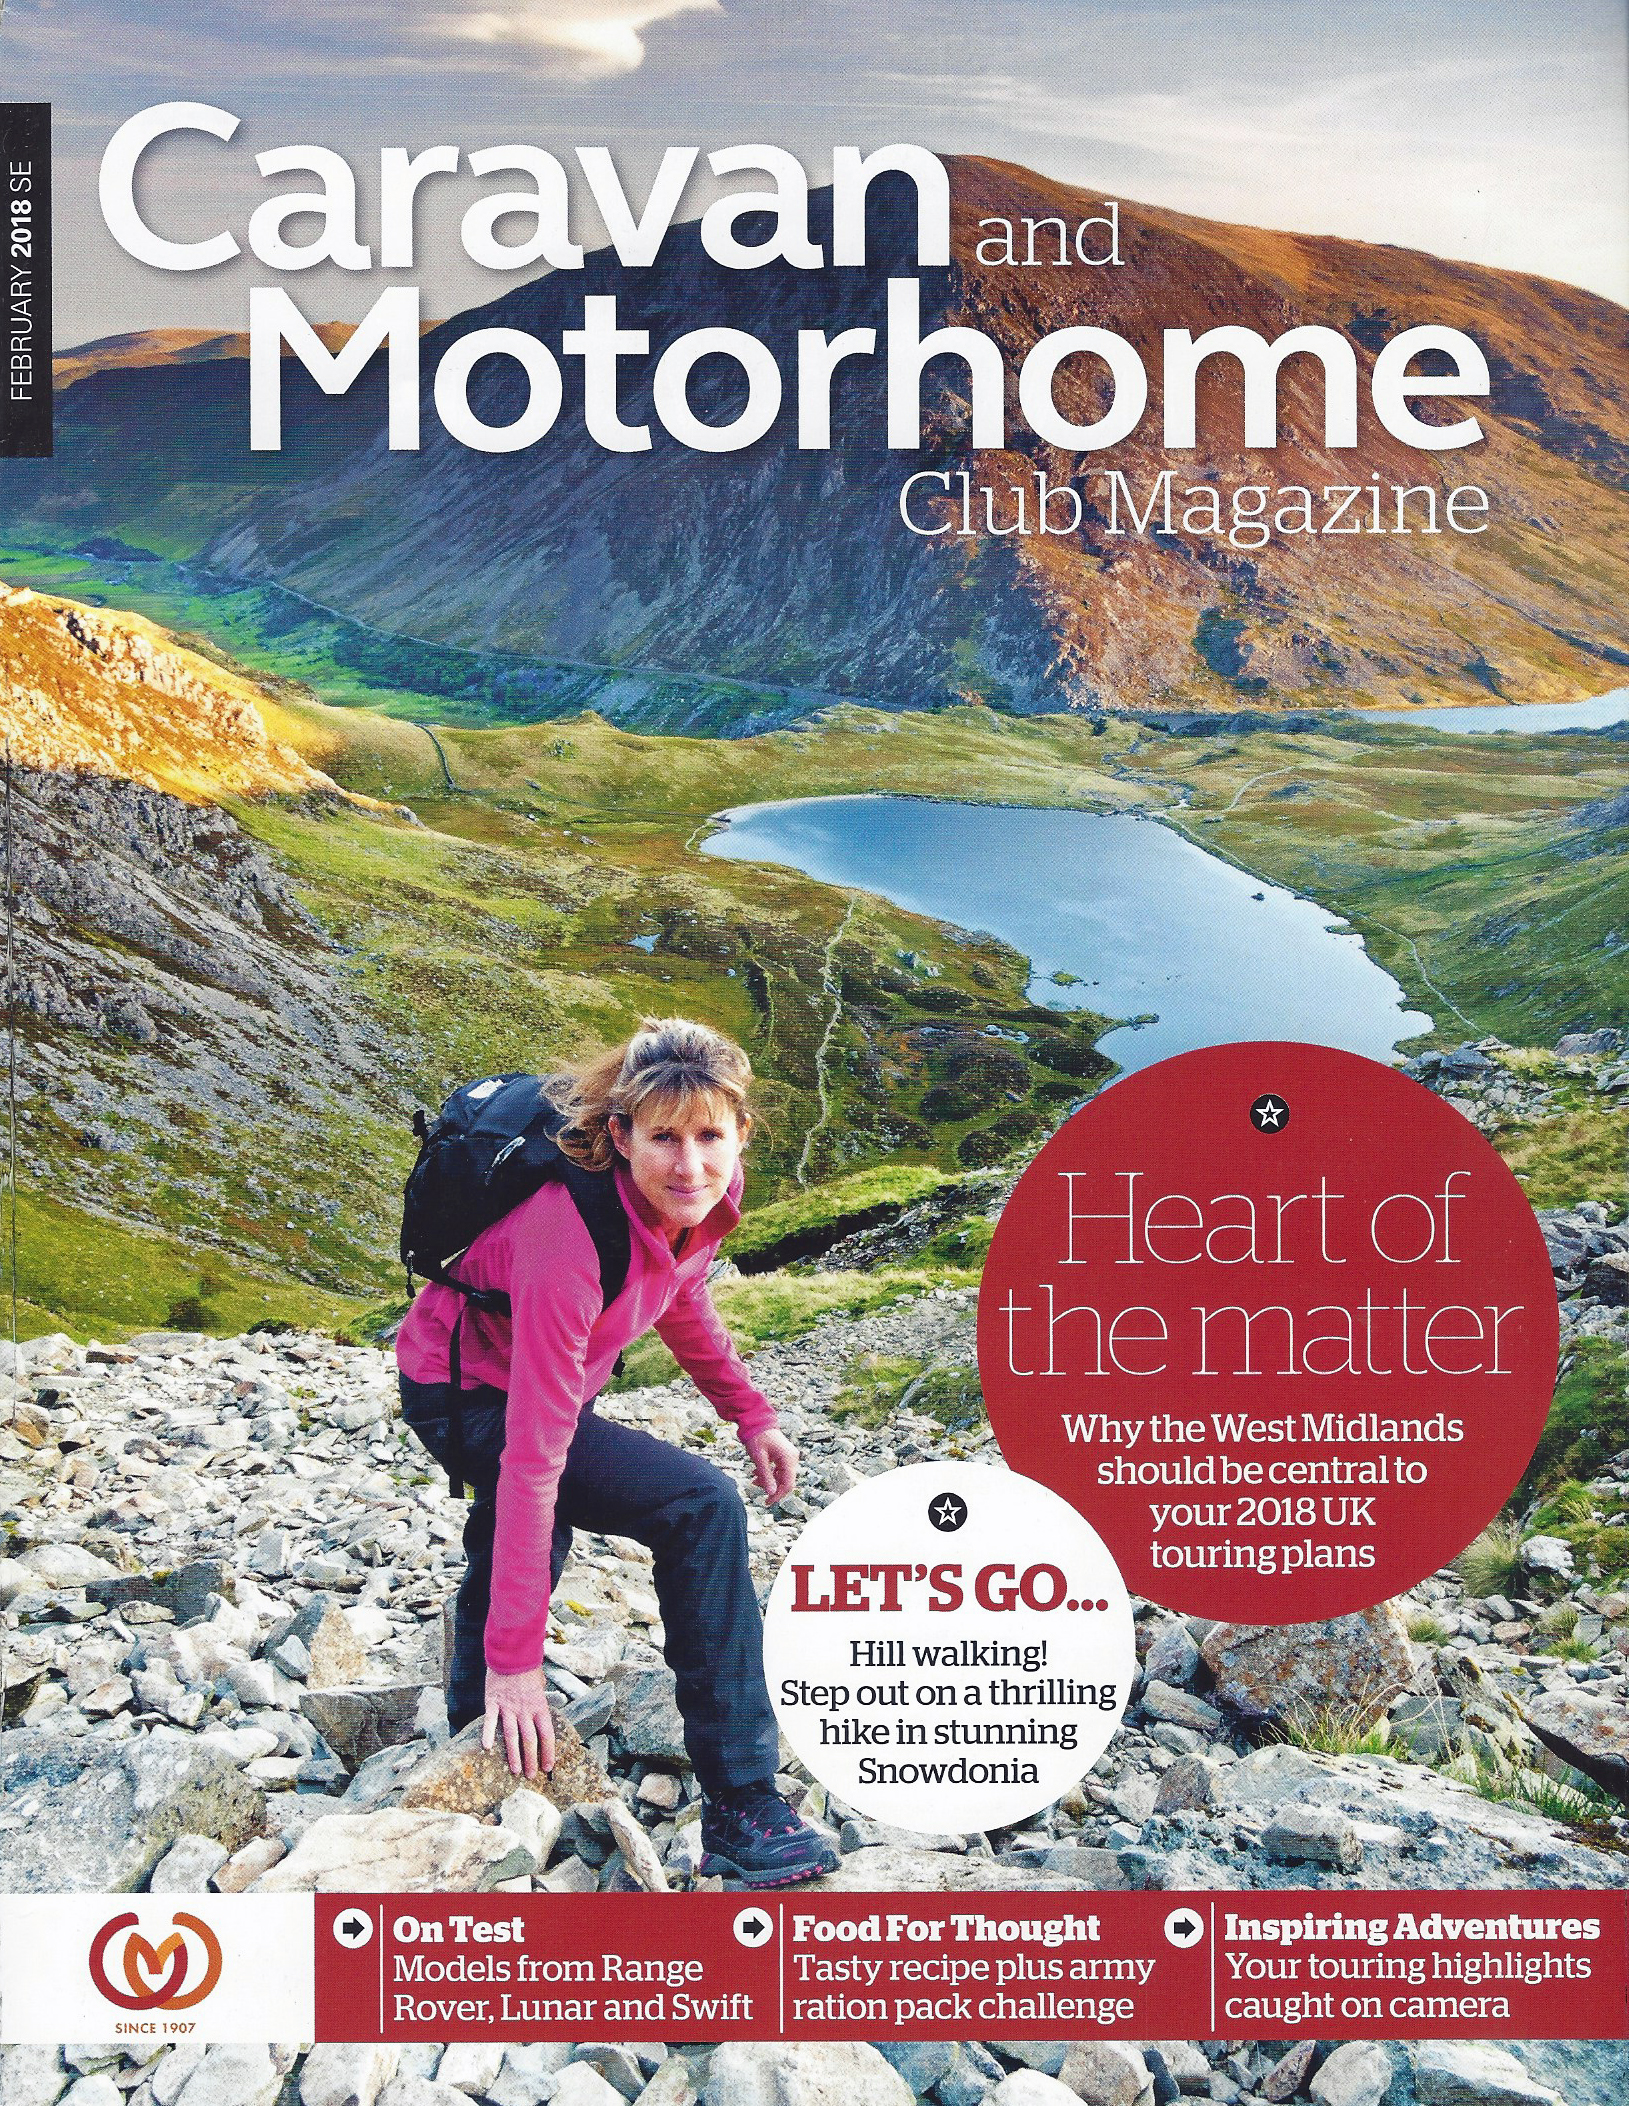 Caravan and Motorhome Club Magazine, February 2018.Cover- hill-walking in Snowdonia